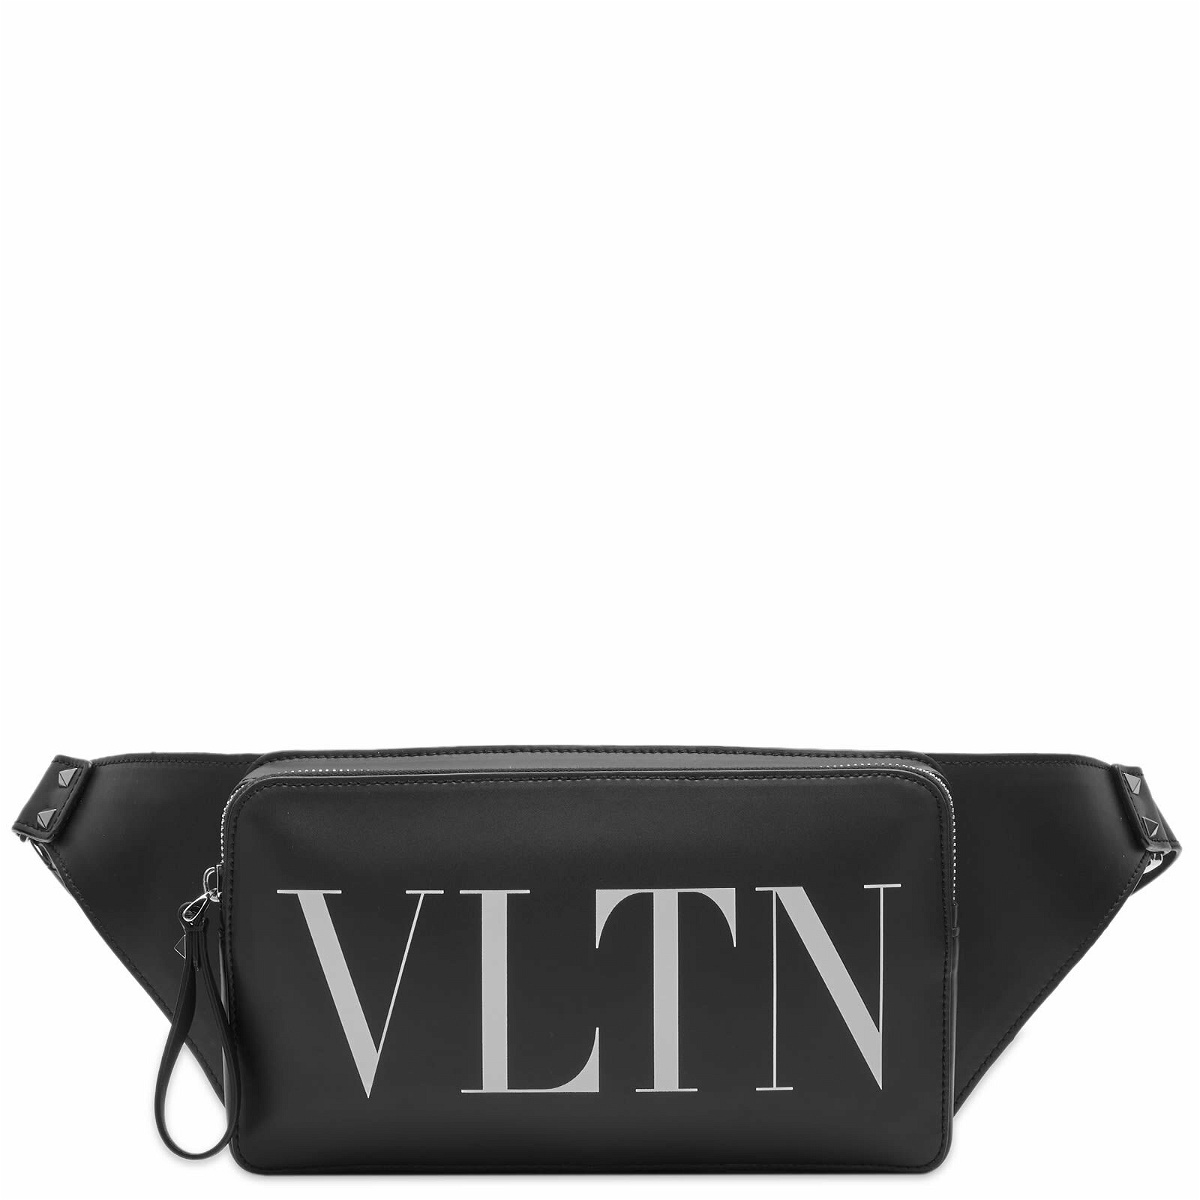 Valentino Men's VLTN Belt Bag in Black/White Valentino